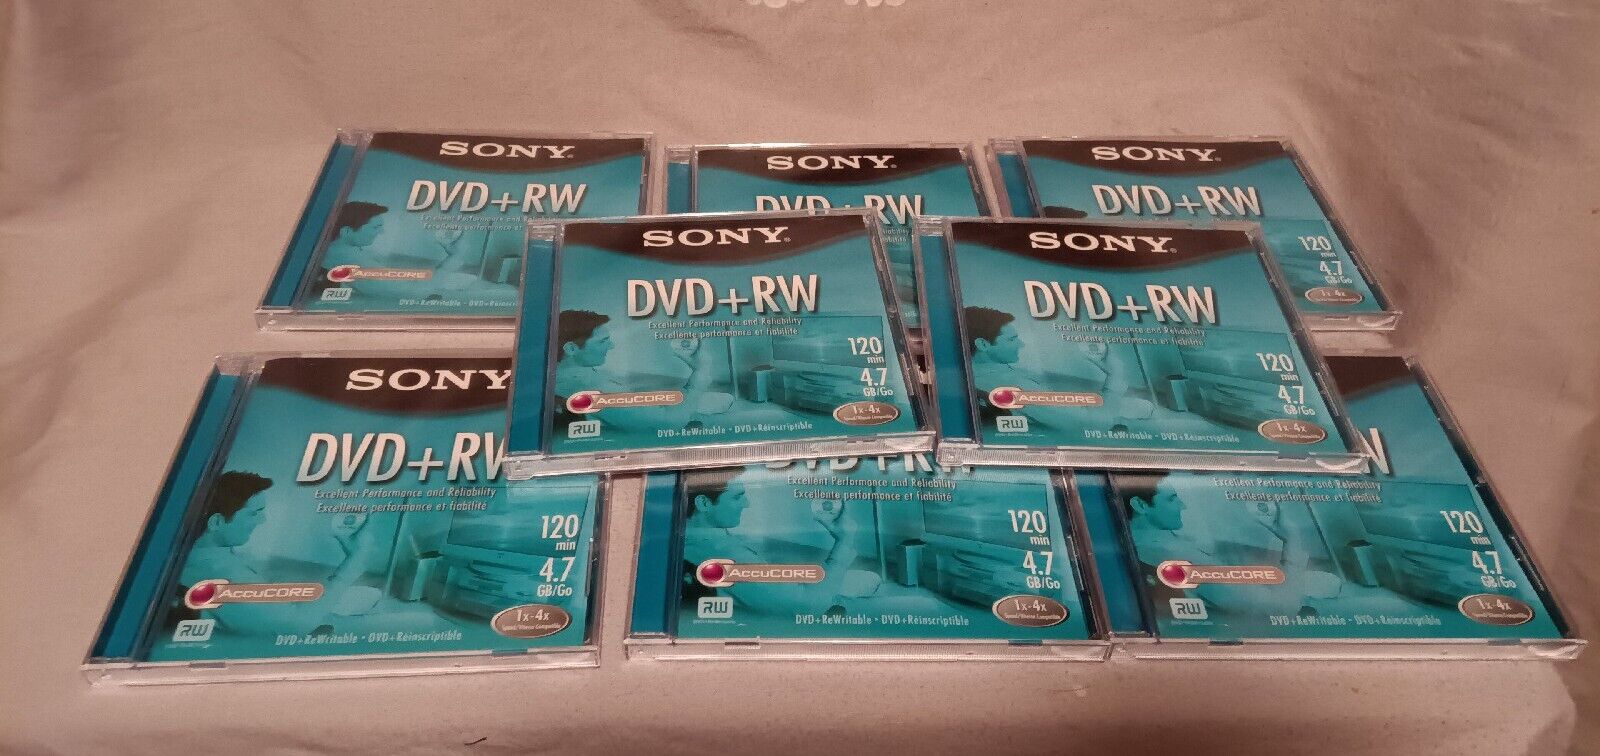 Sony DVD+RW Rewritable 120 Minutes 4.7GB Lot Of 8